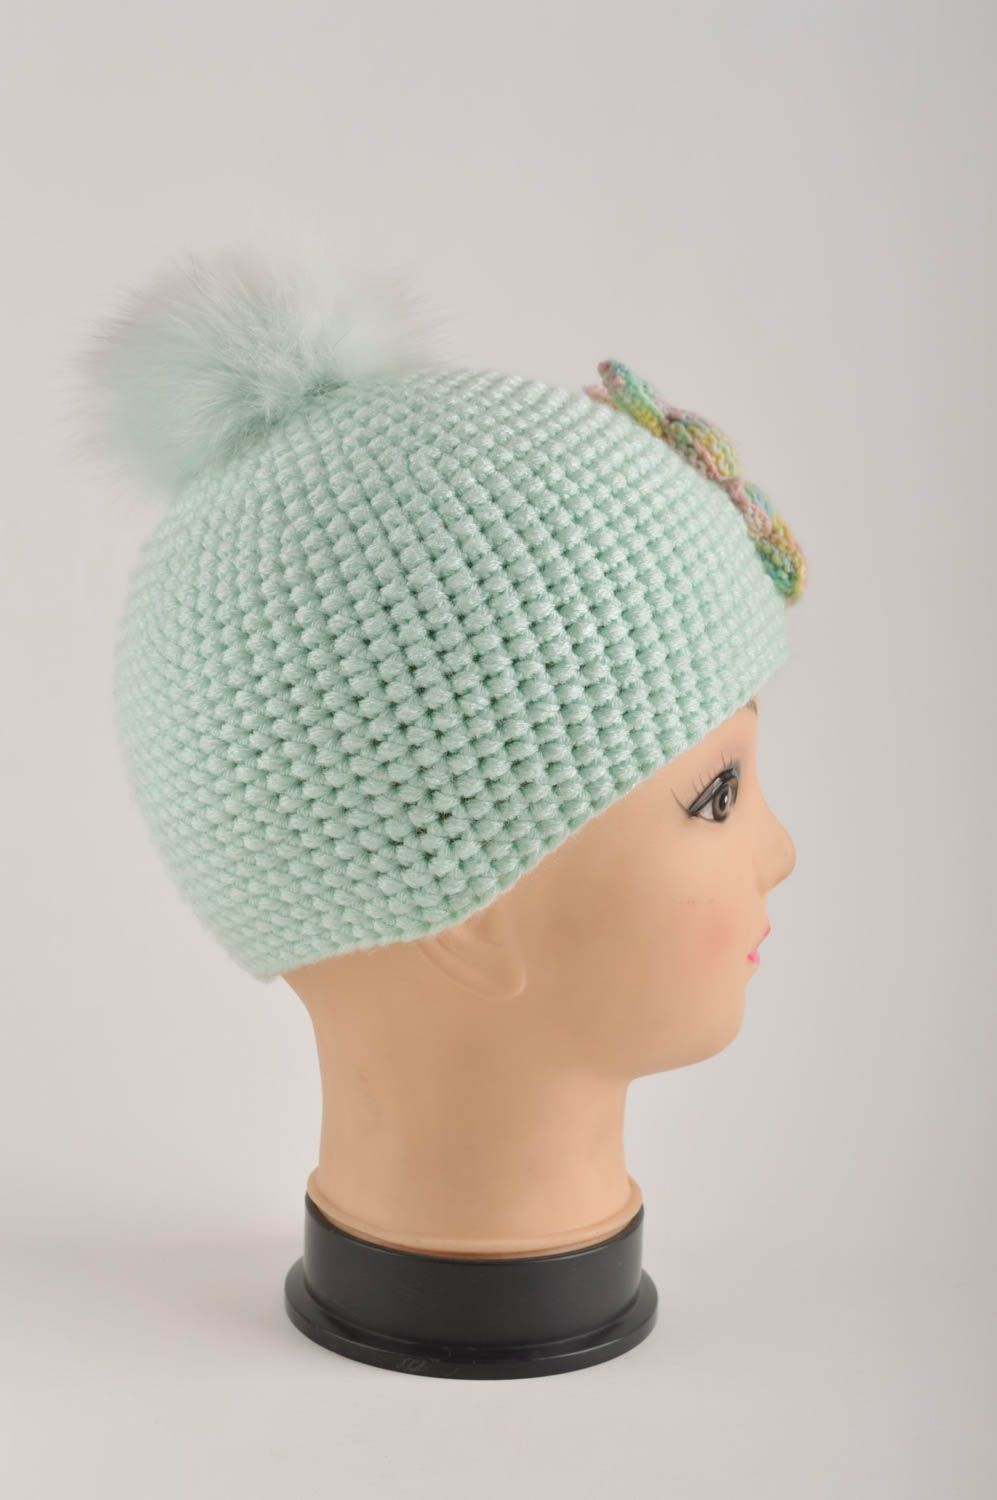 Handmade winter hat warm hat ladies winter hat fashion accessories gifts for her photo 4